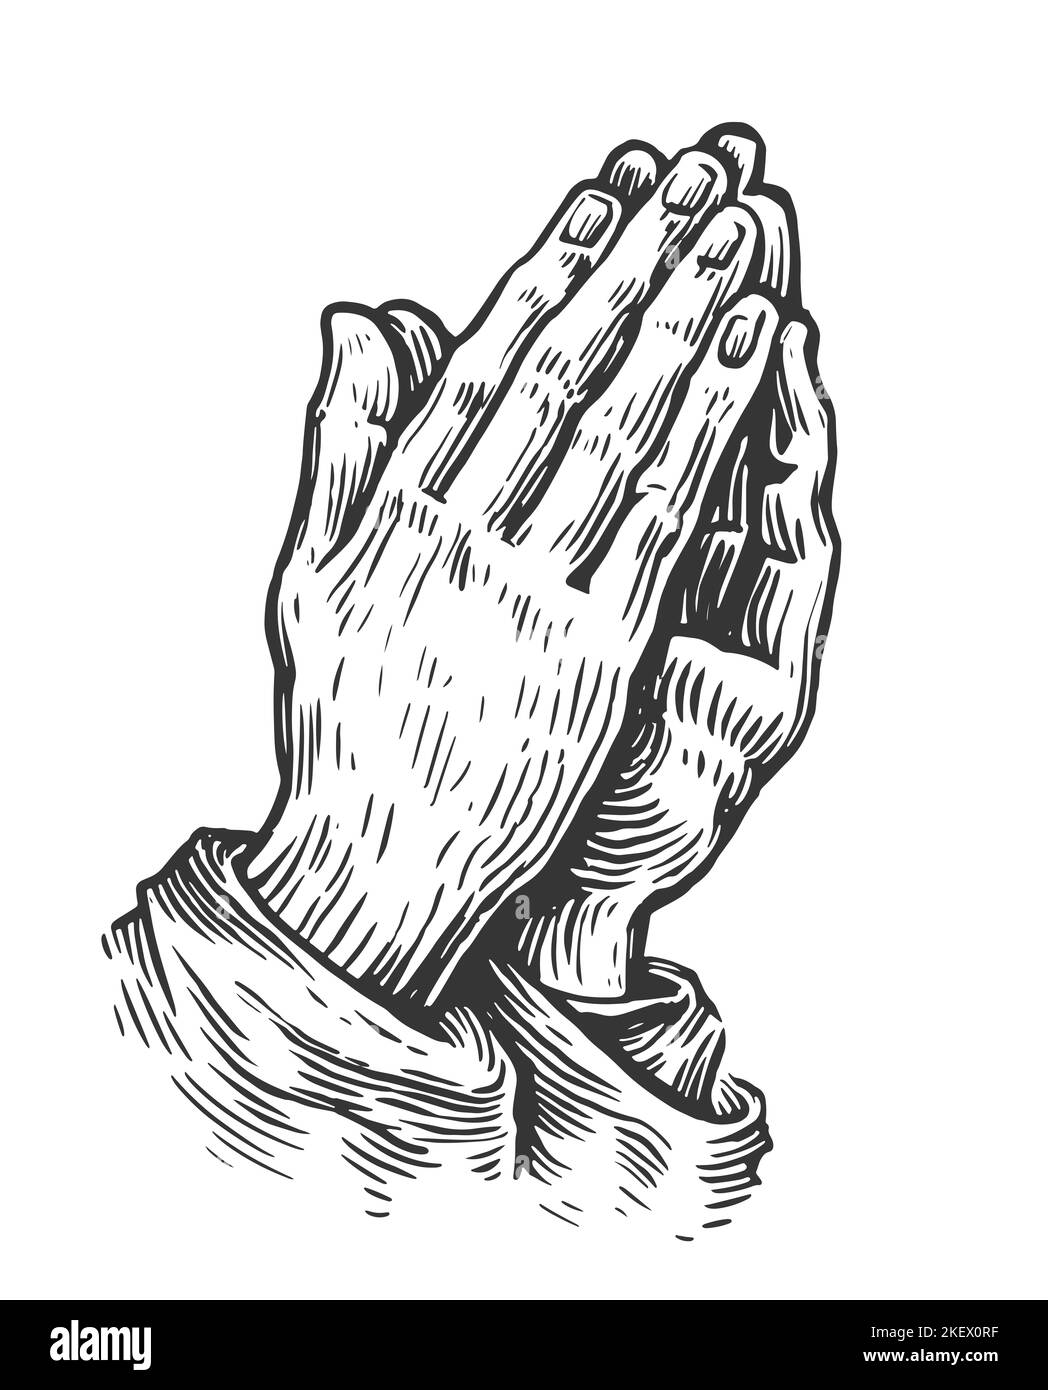 Praying hands. Two hands in prayer pose. Worship, pray symbol. Sketch vintage illustration Stock Photo